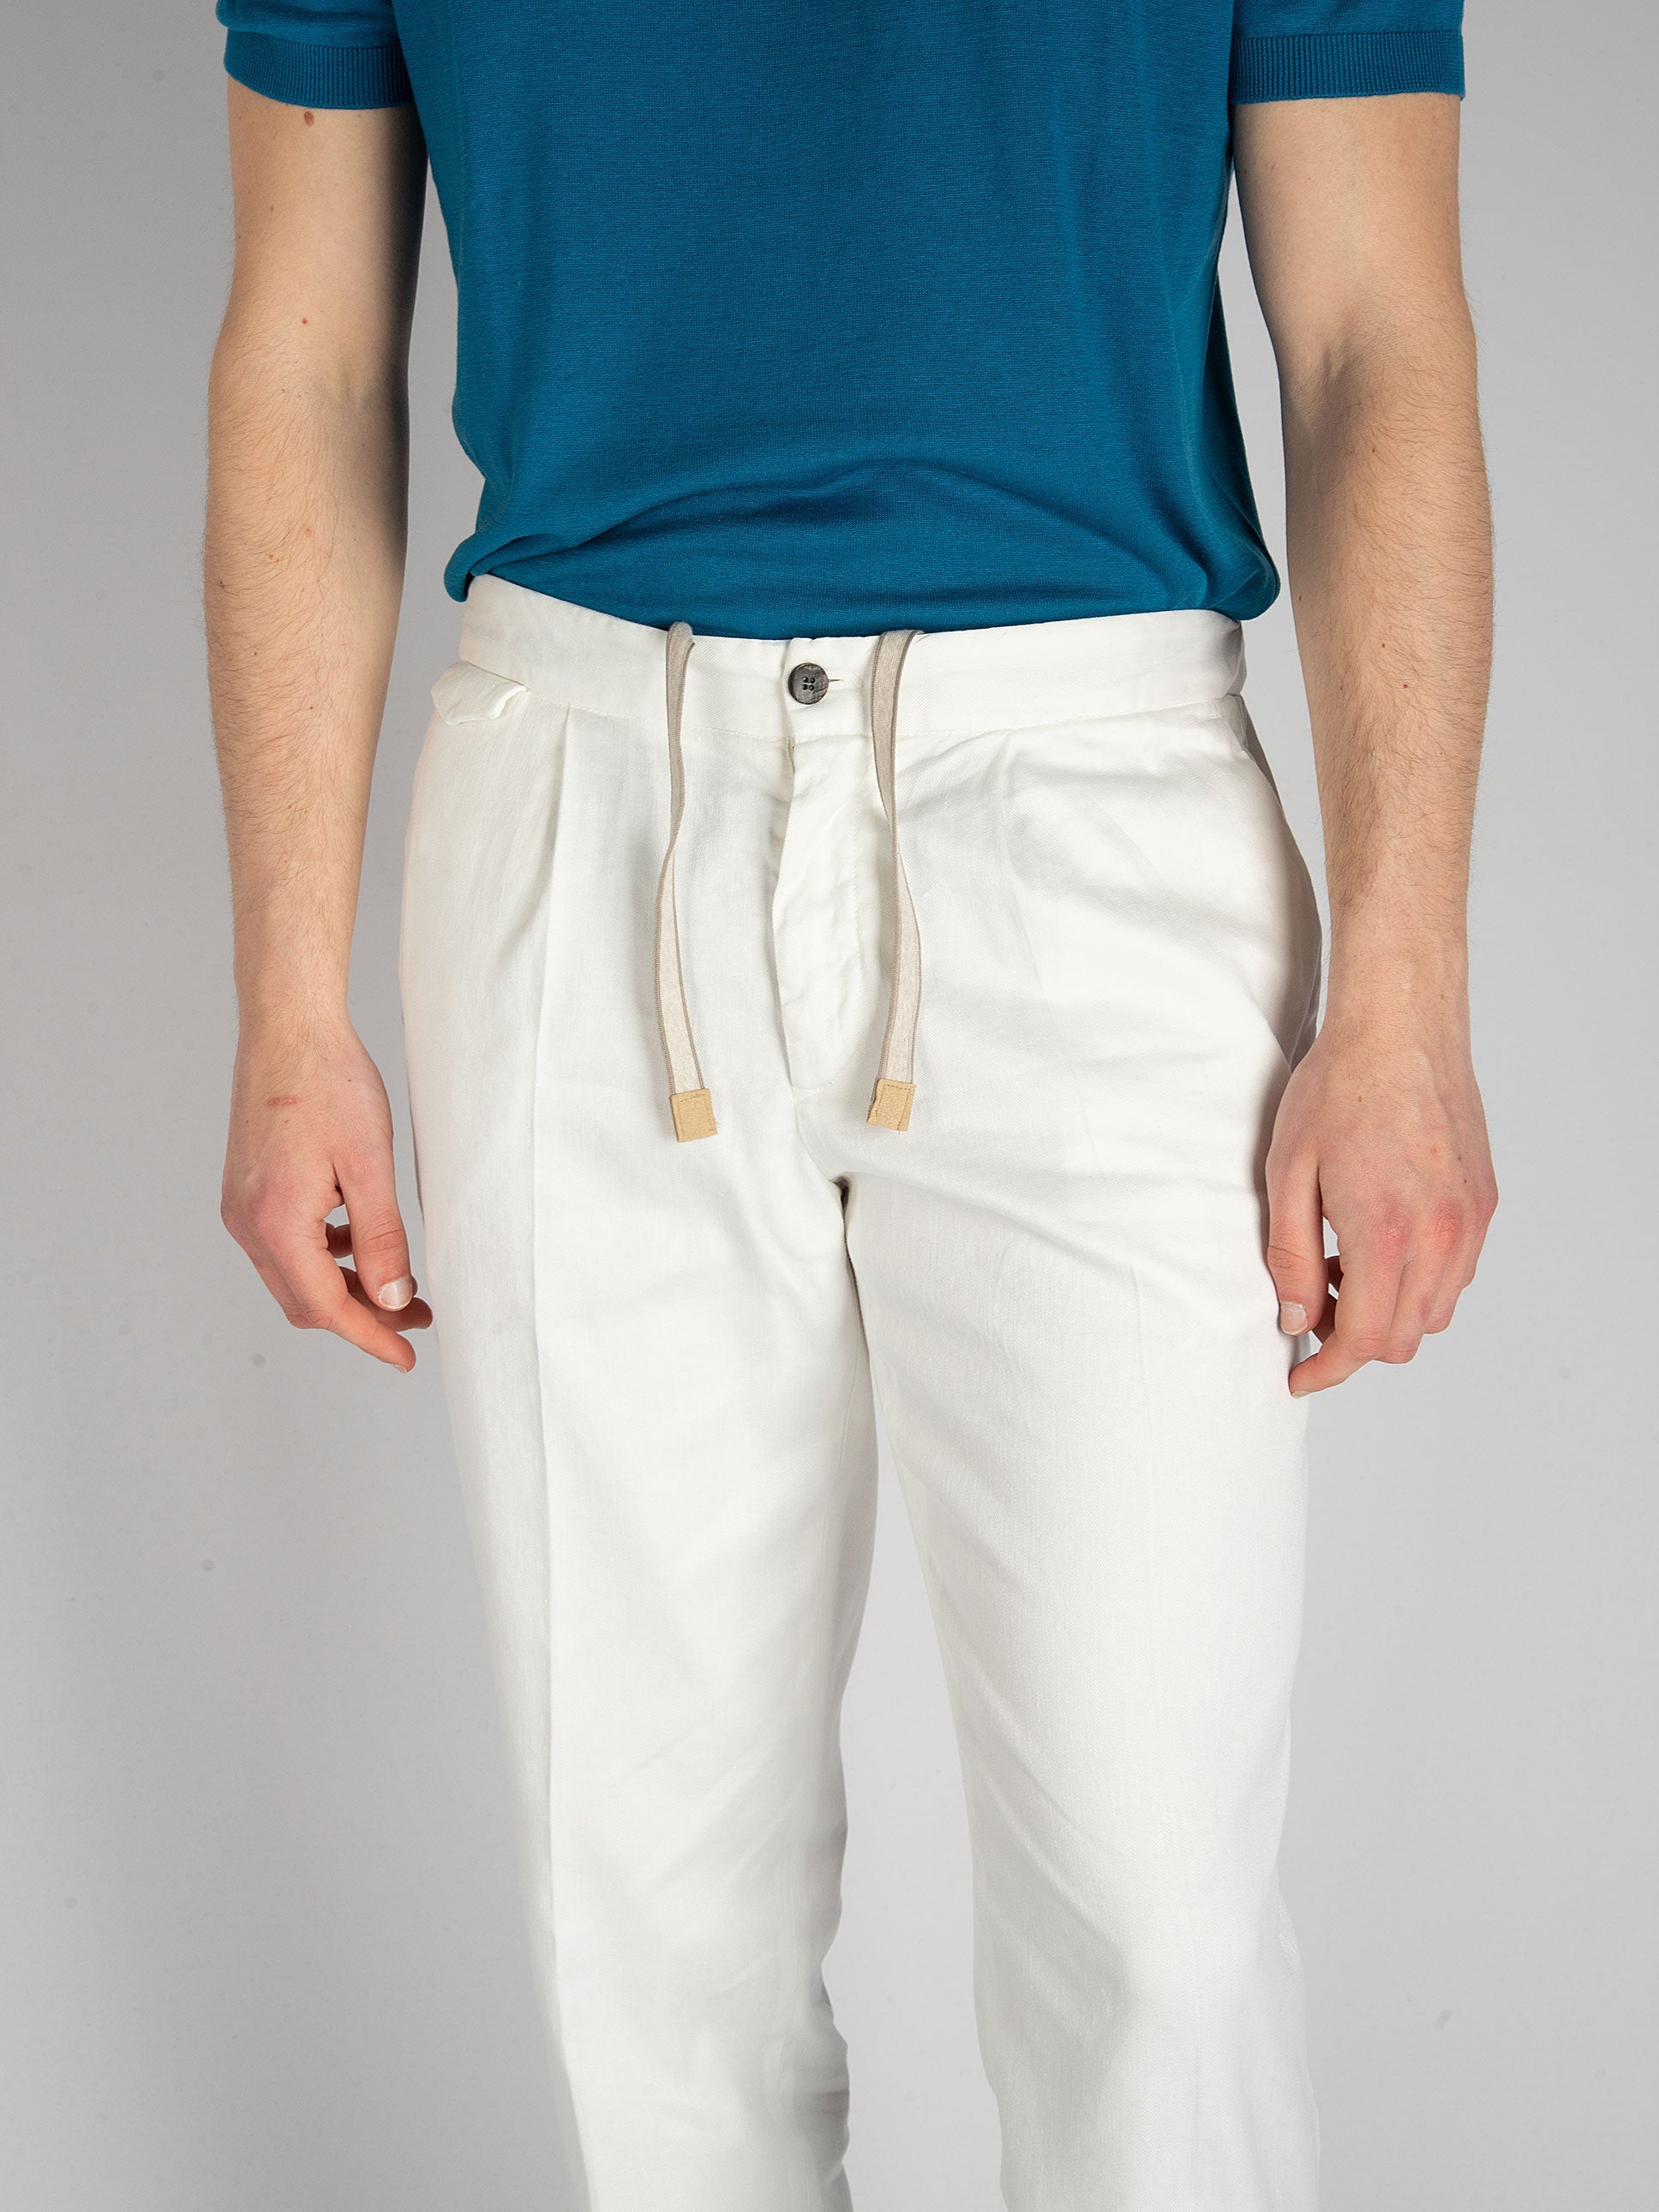 Pantalone DVR14 Cotone Llino - Bianco